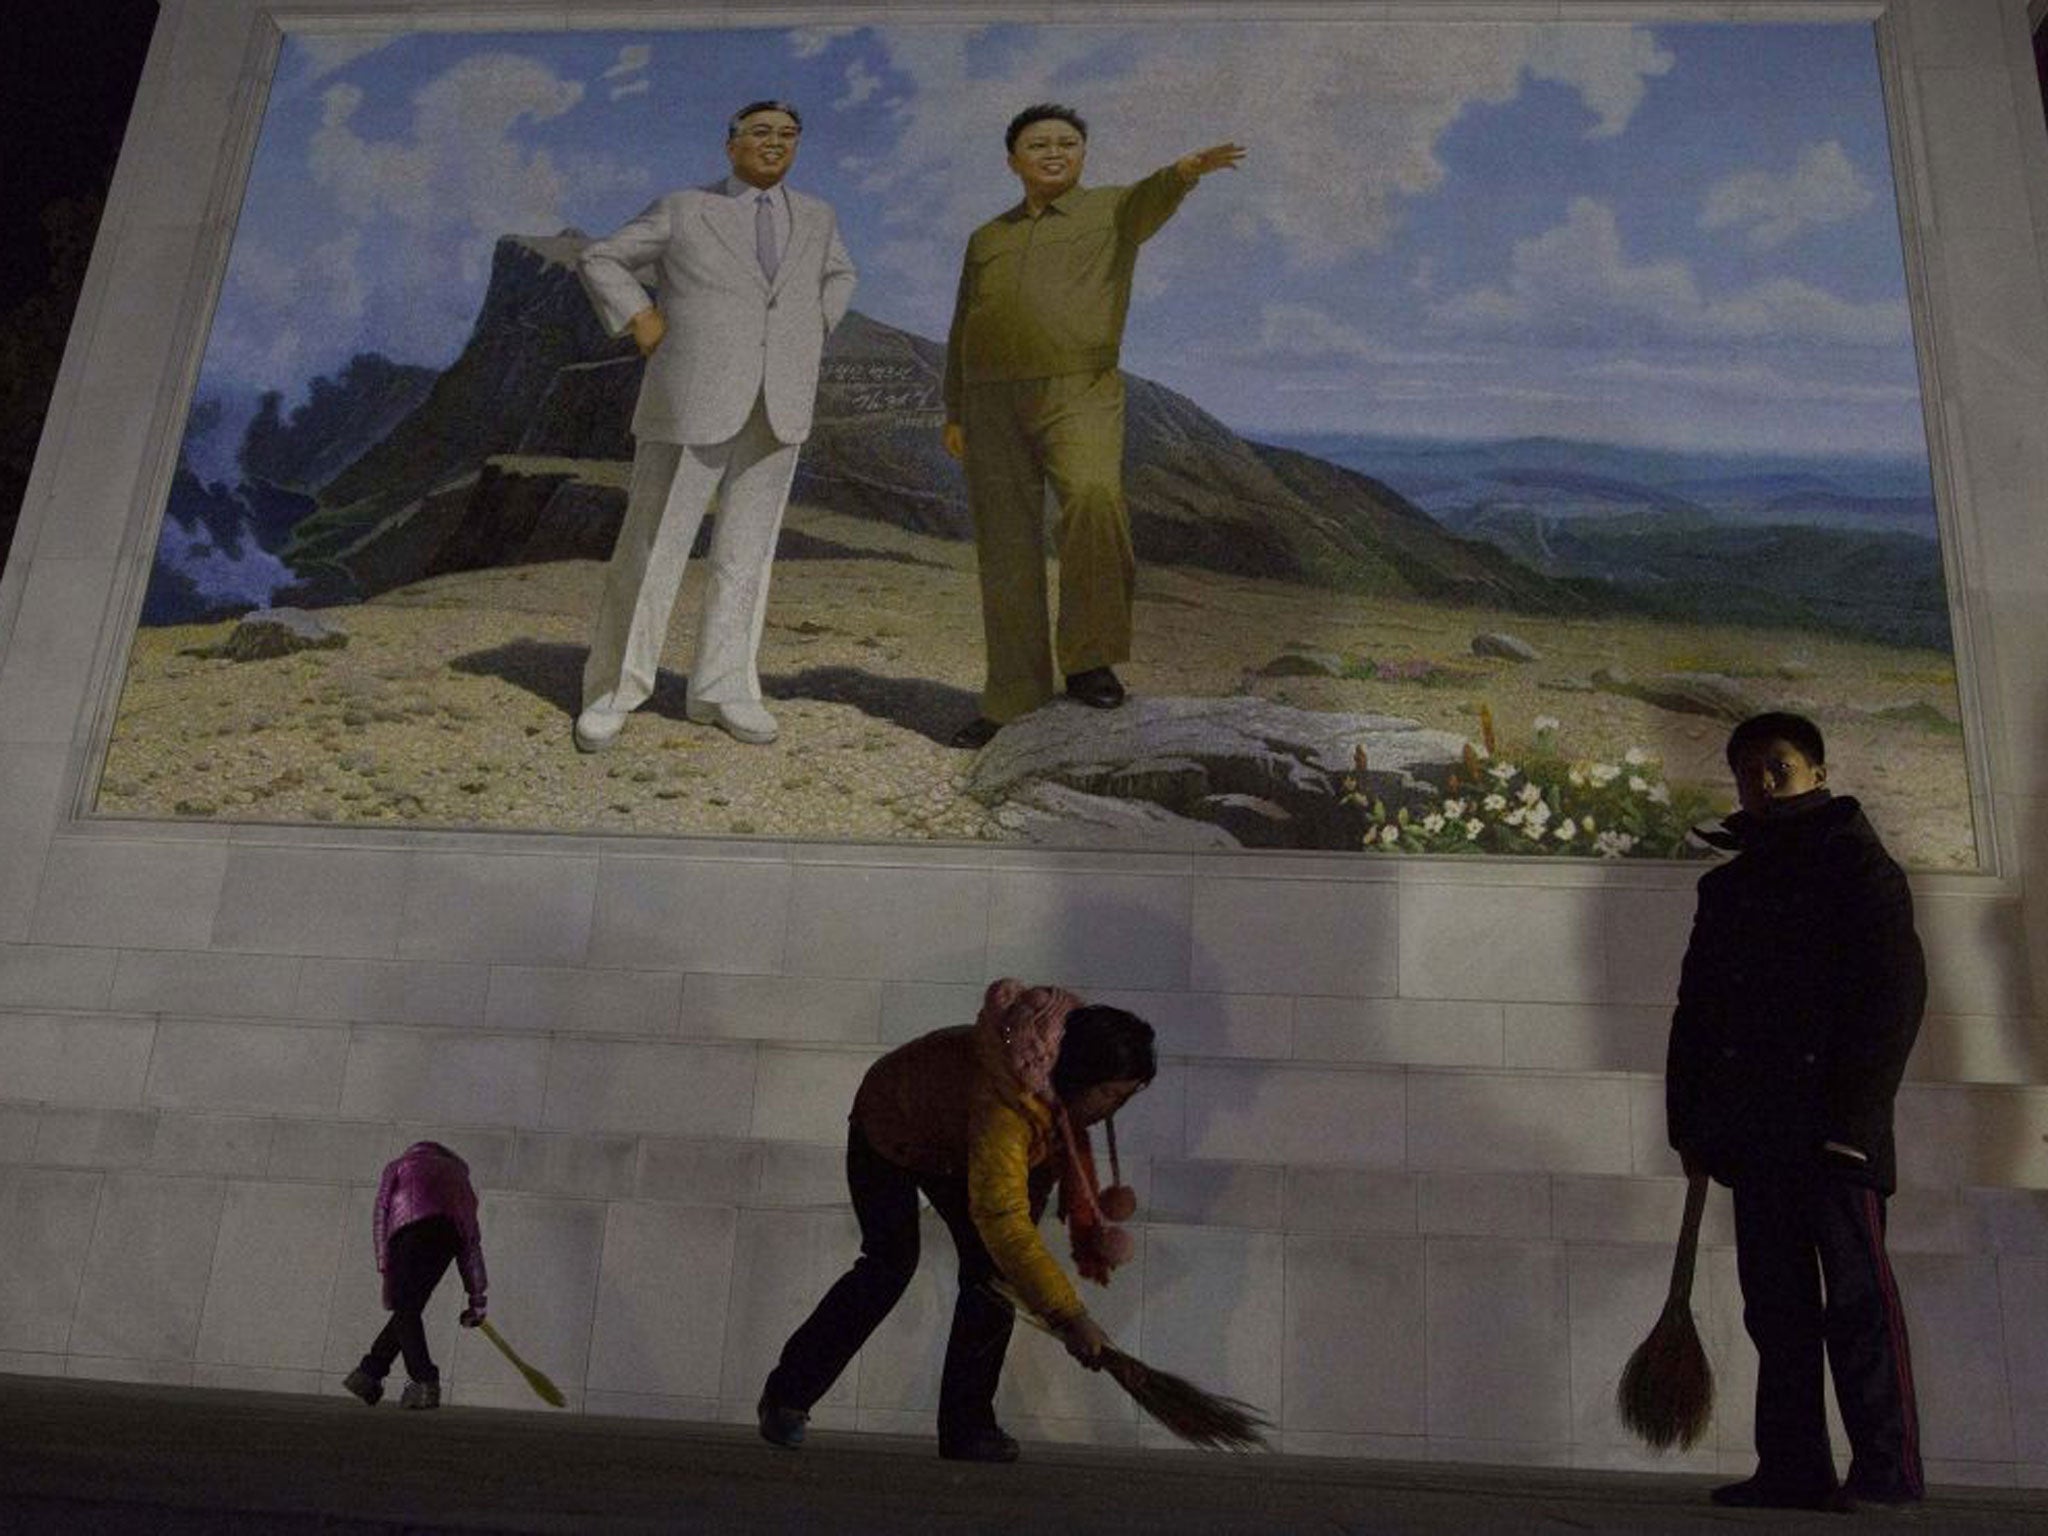 KIm Jong-il (left), unlike his son Kim Jong-un, did not stage show trials